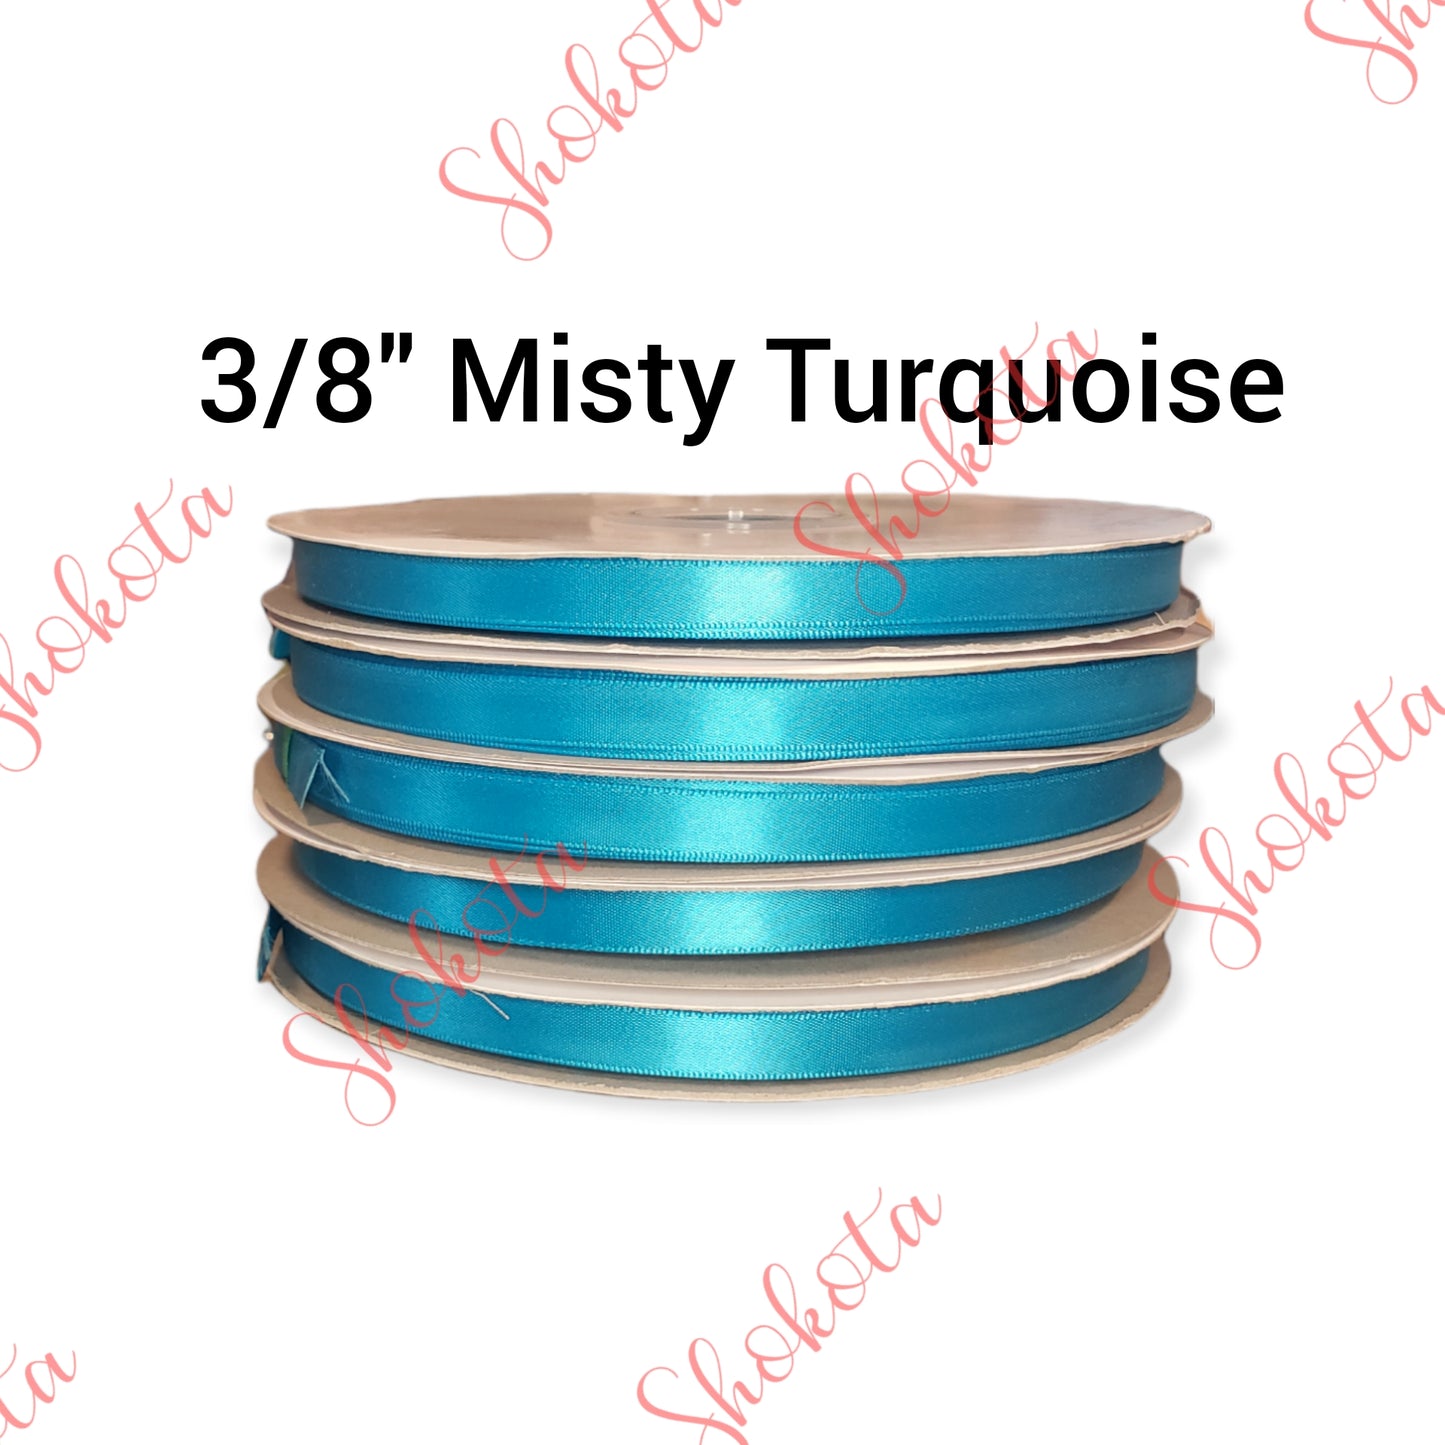 3/8" Misty Turquoise Satin Ribbon